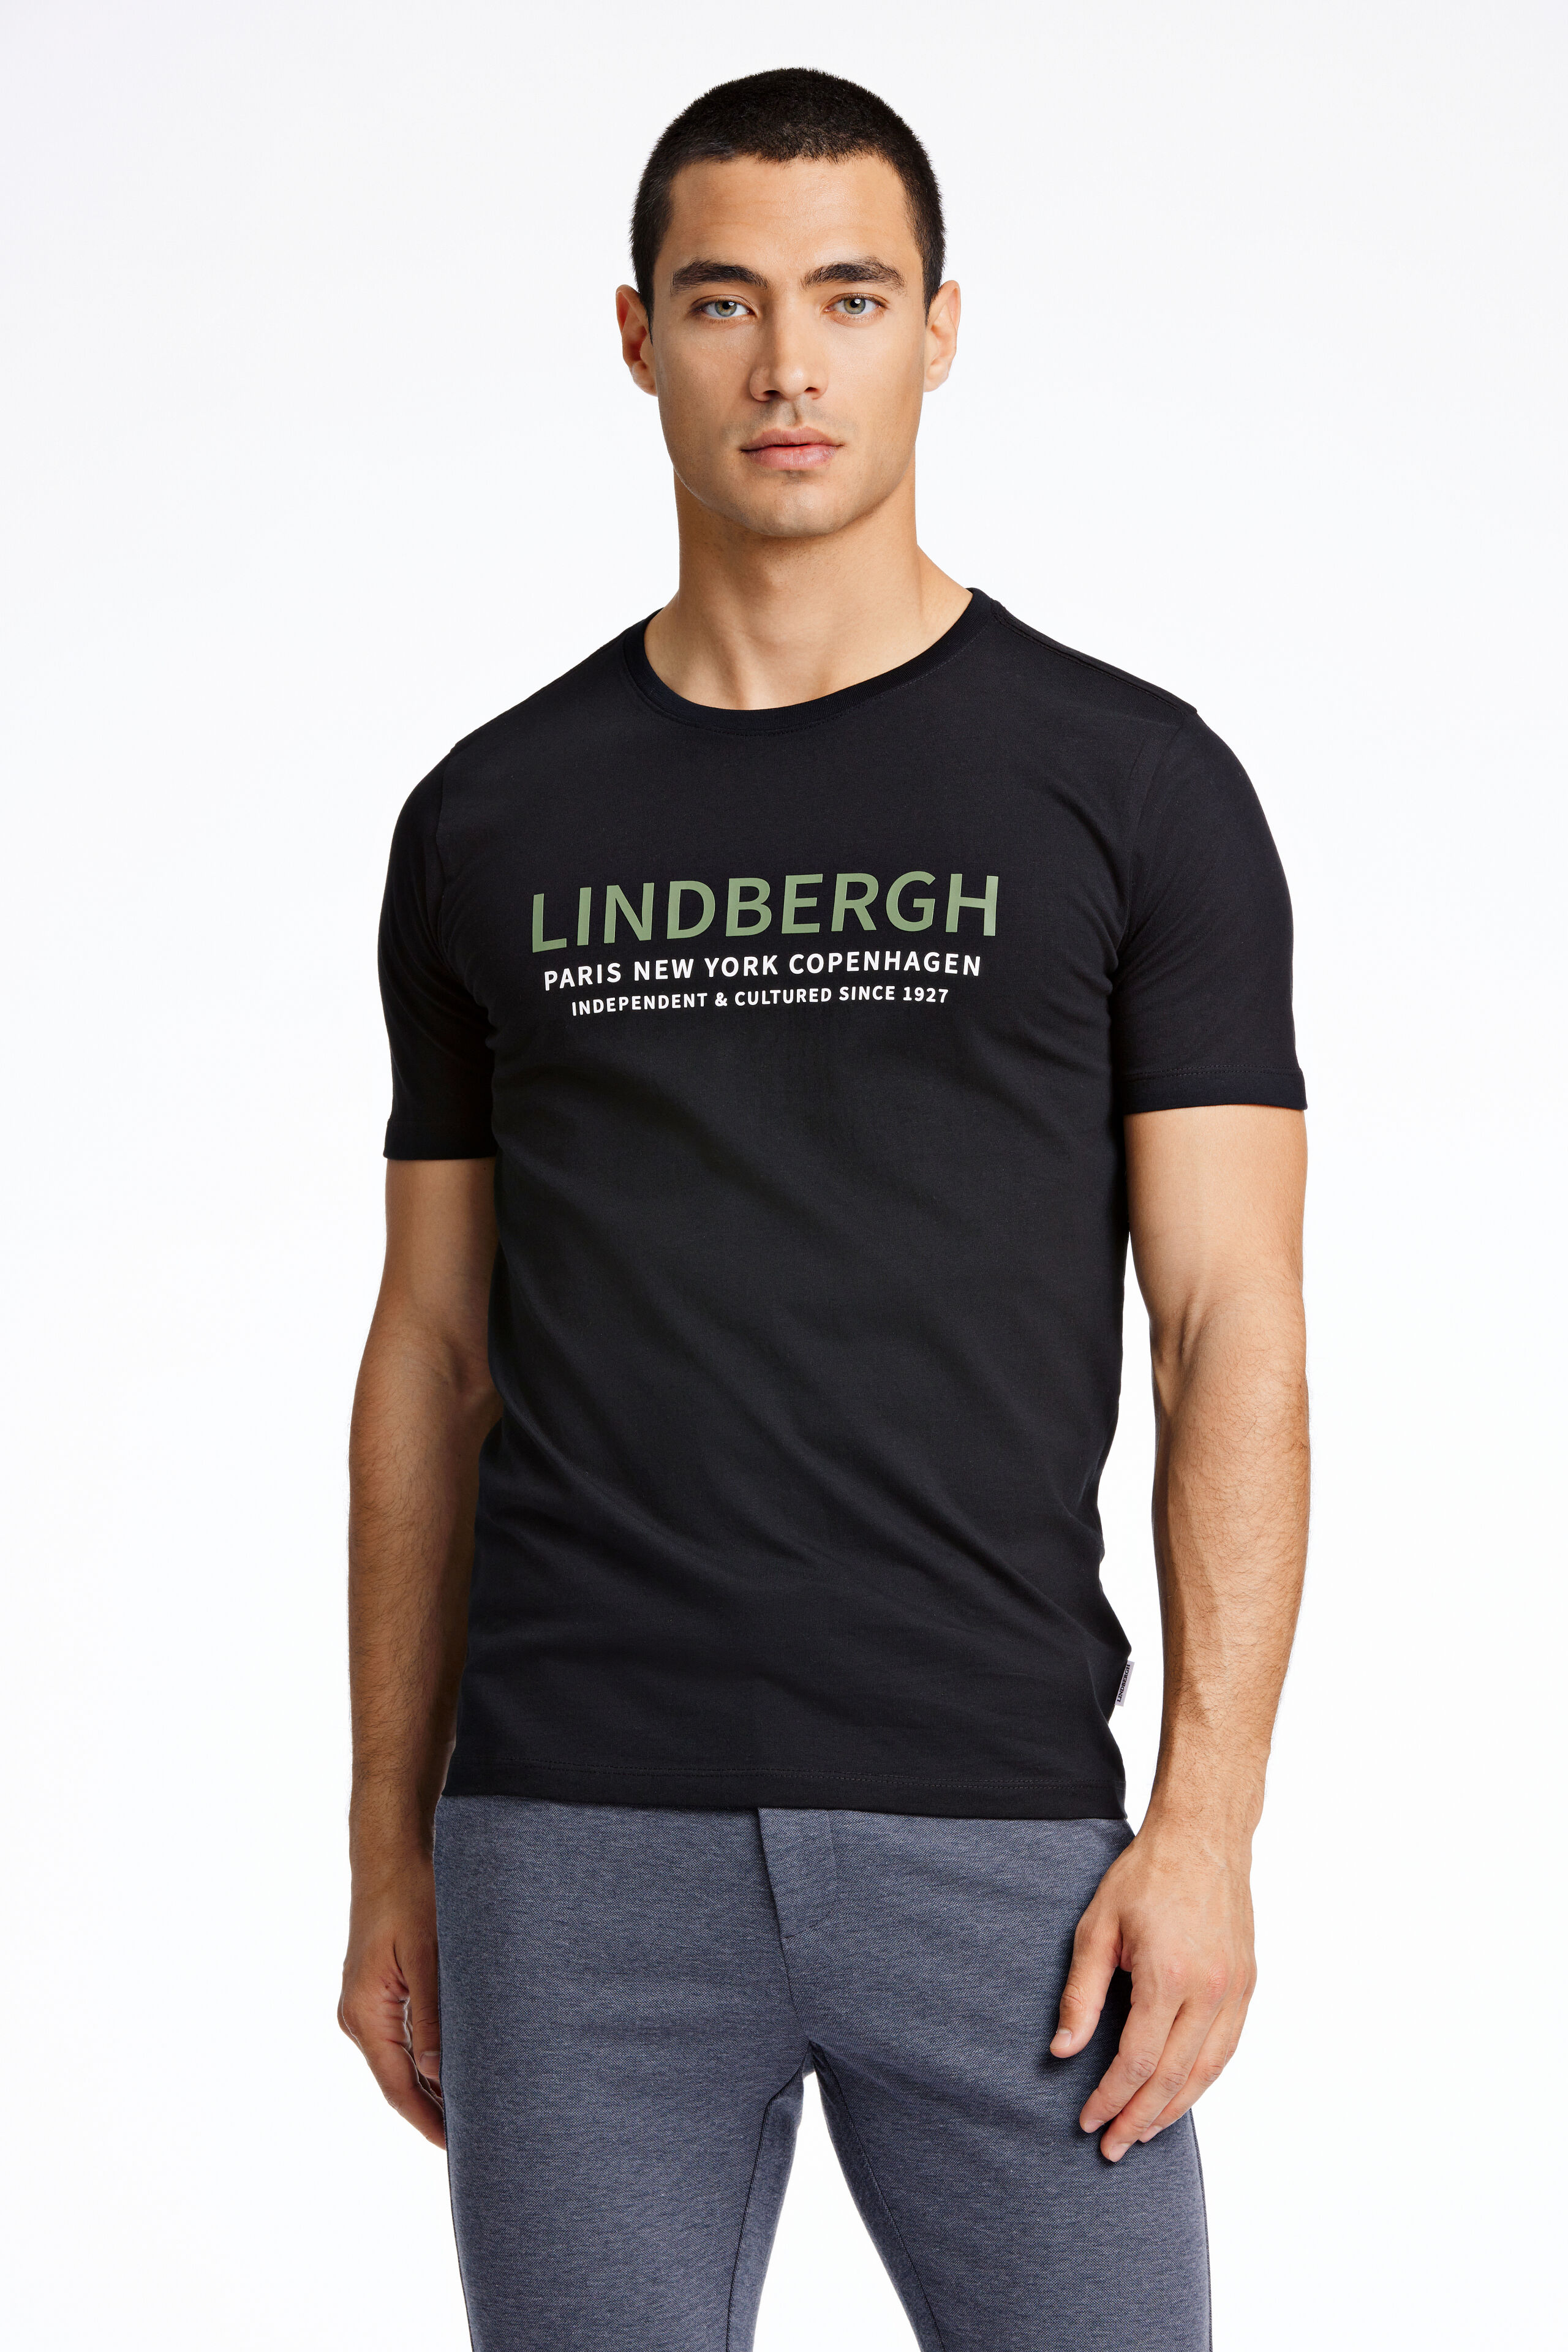 Lindbergh  30-400201